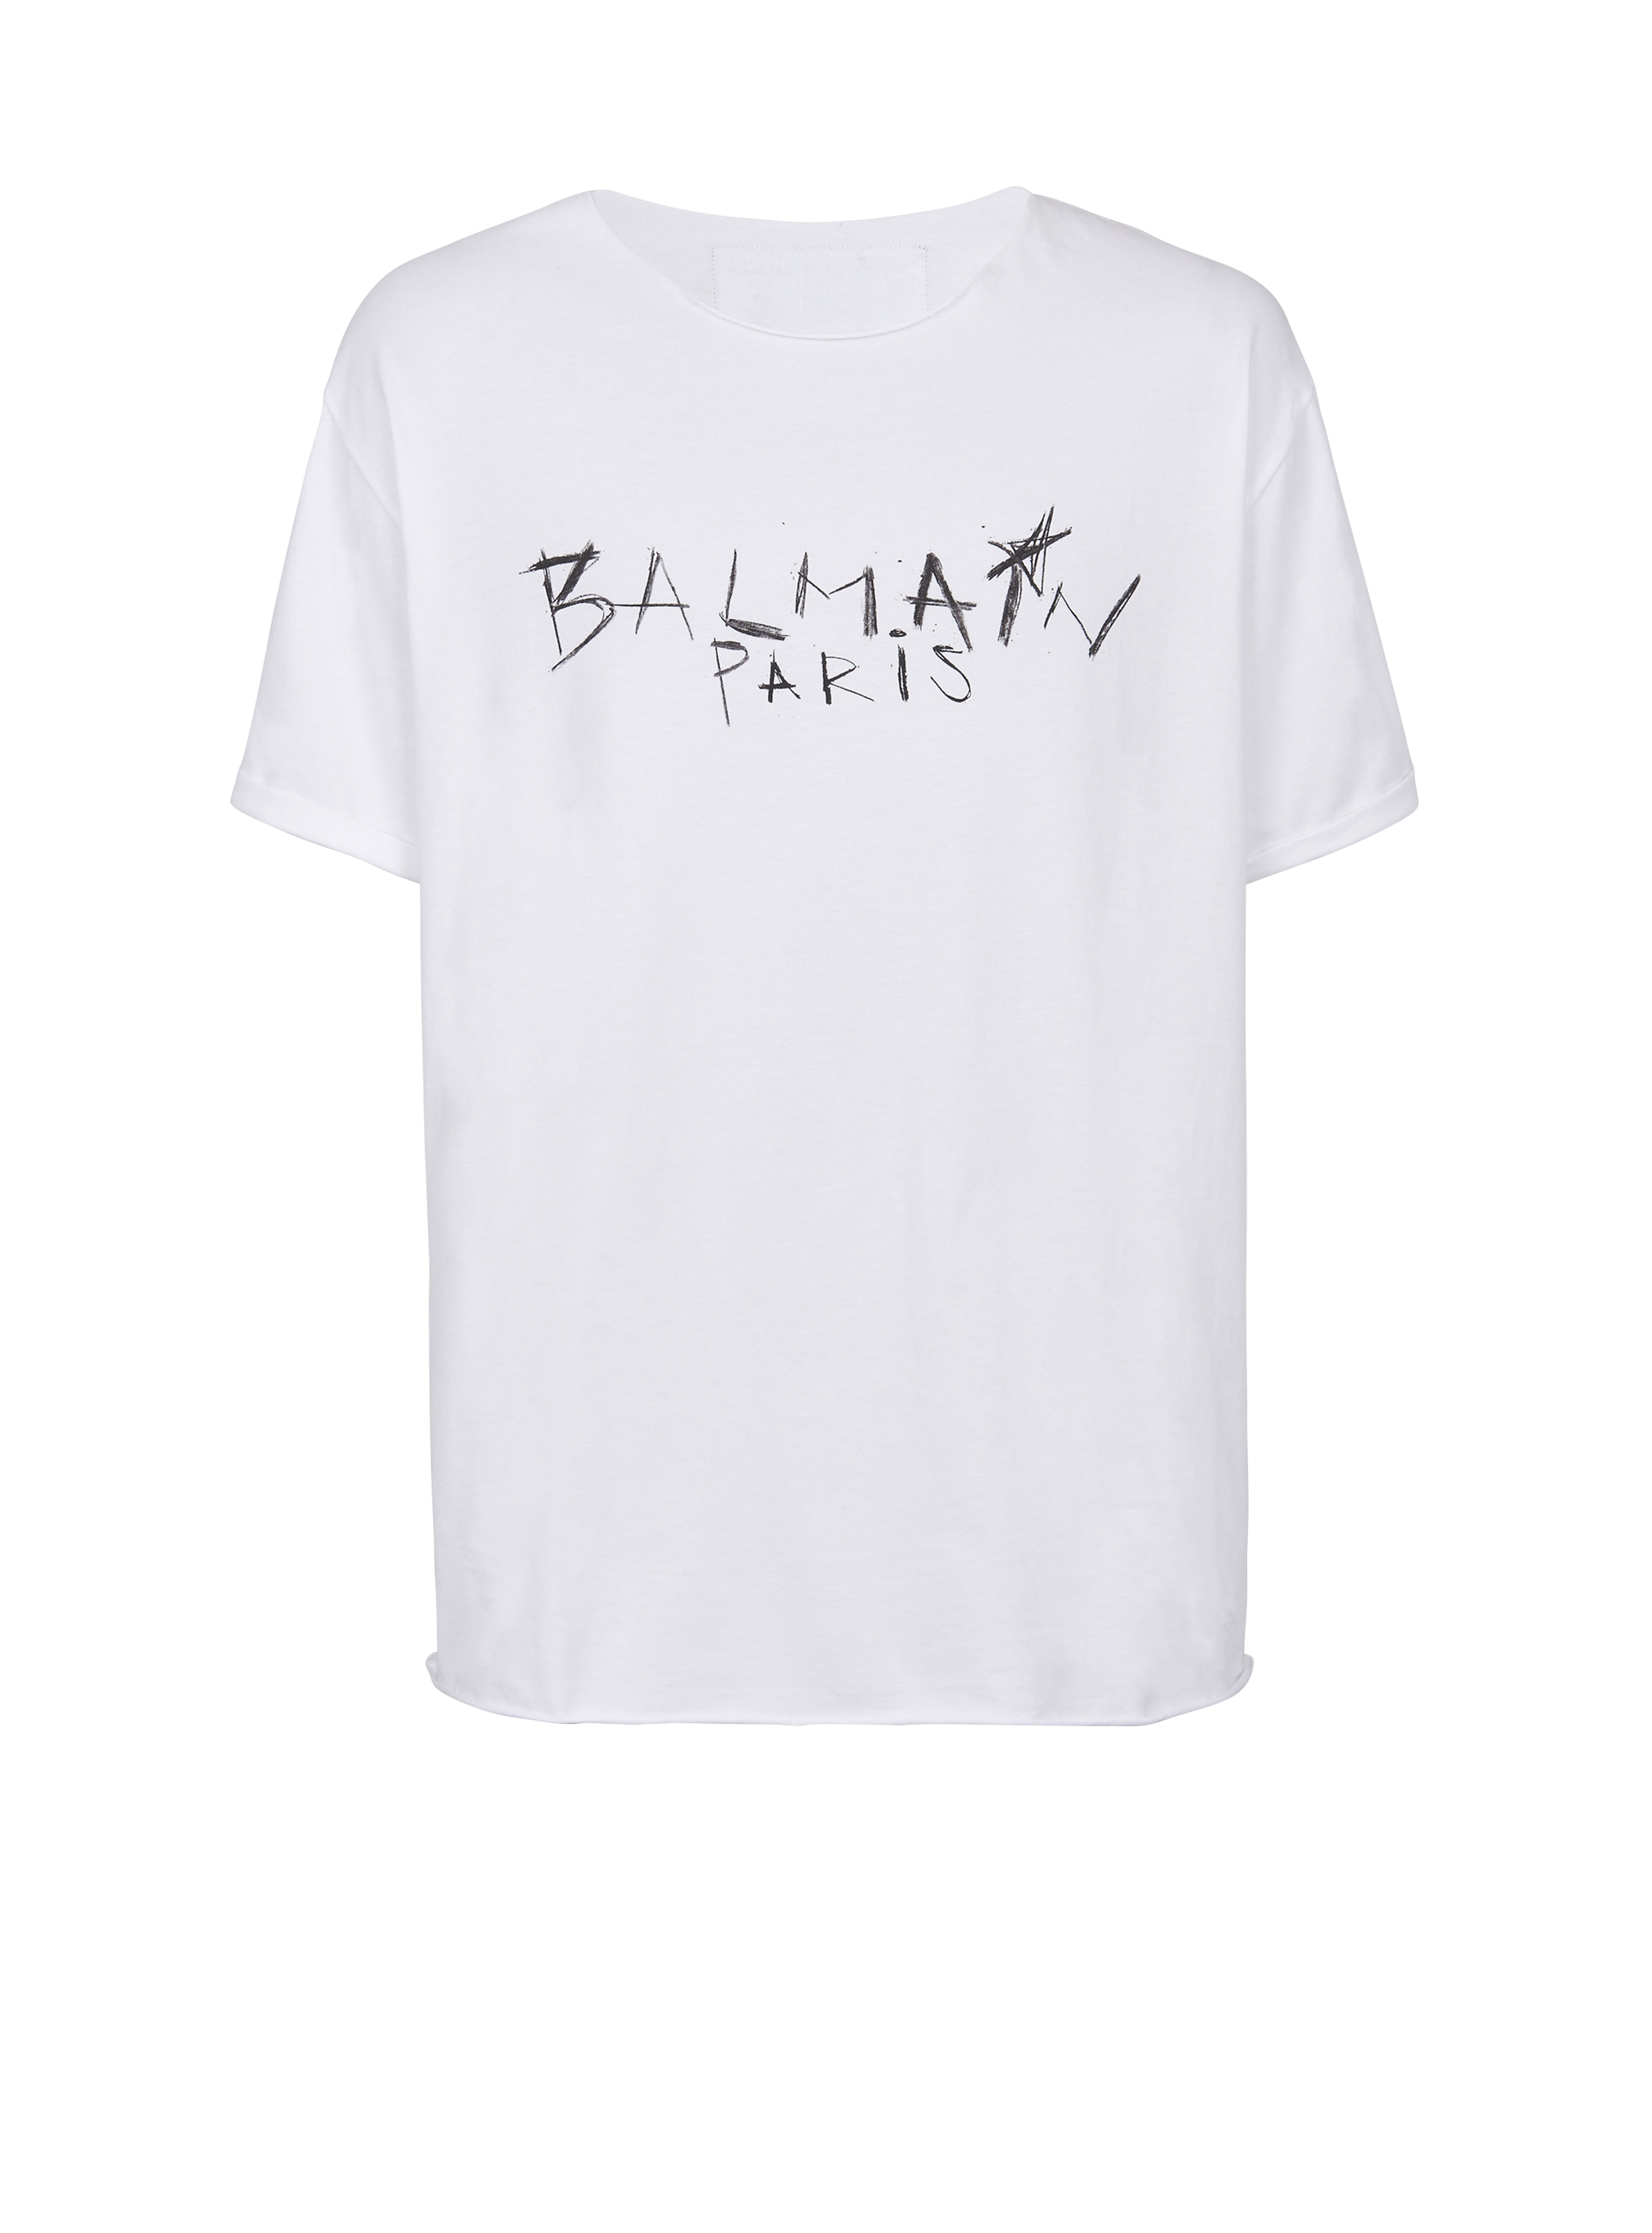 T-shirt in cotone con logo Balmain Paris graffiti, bianco